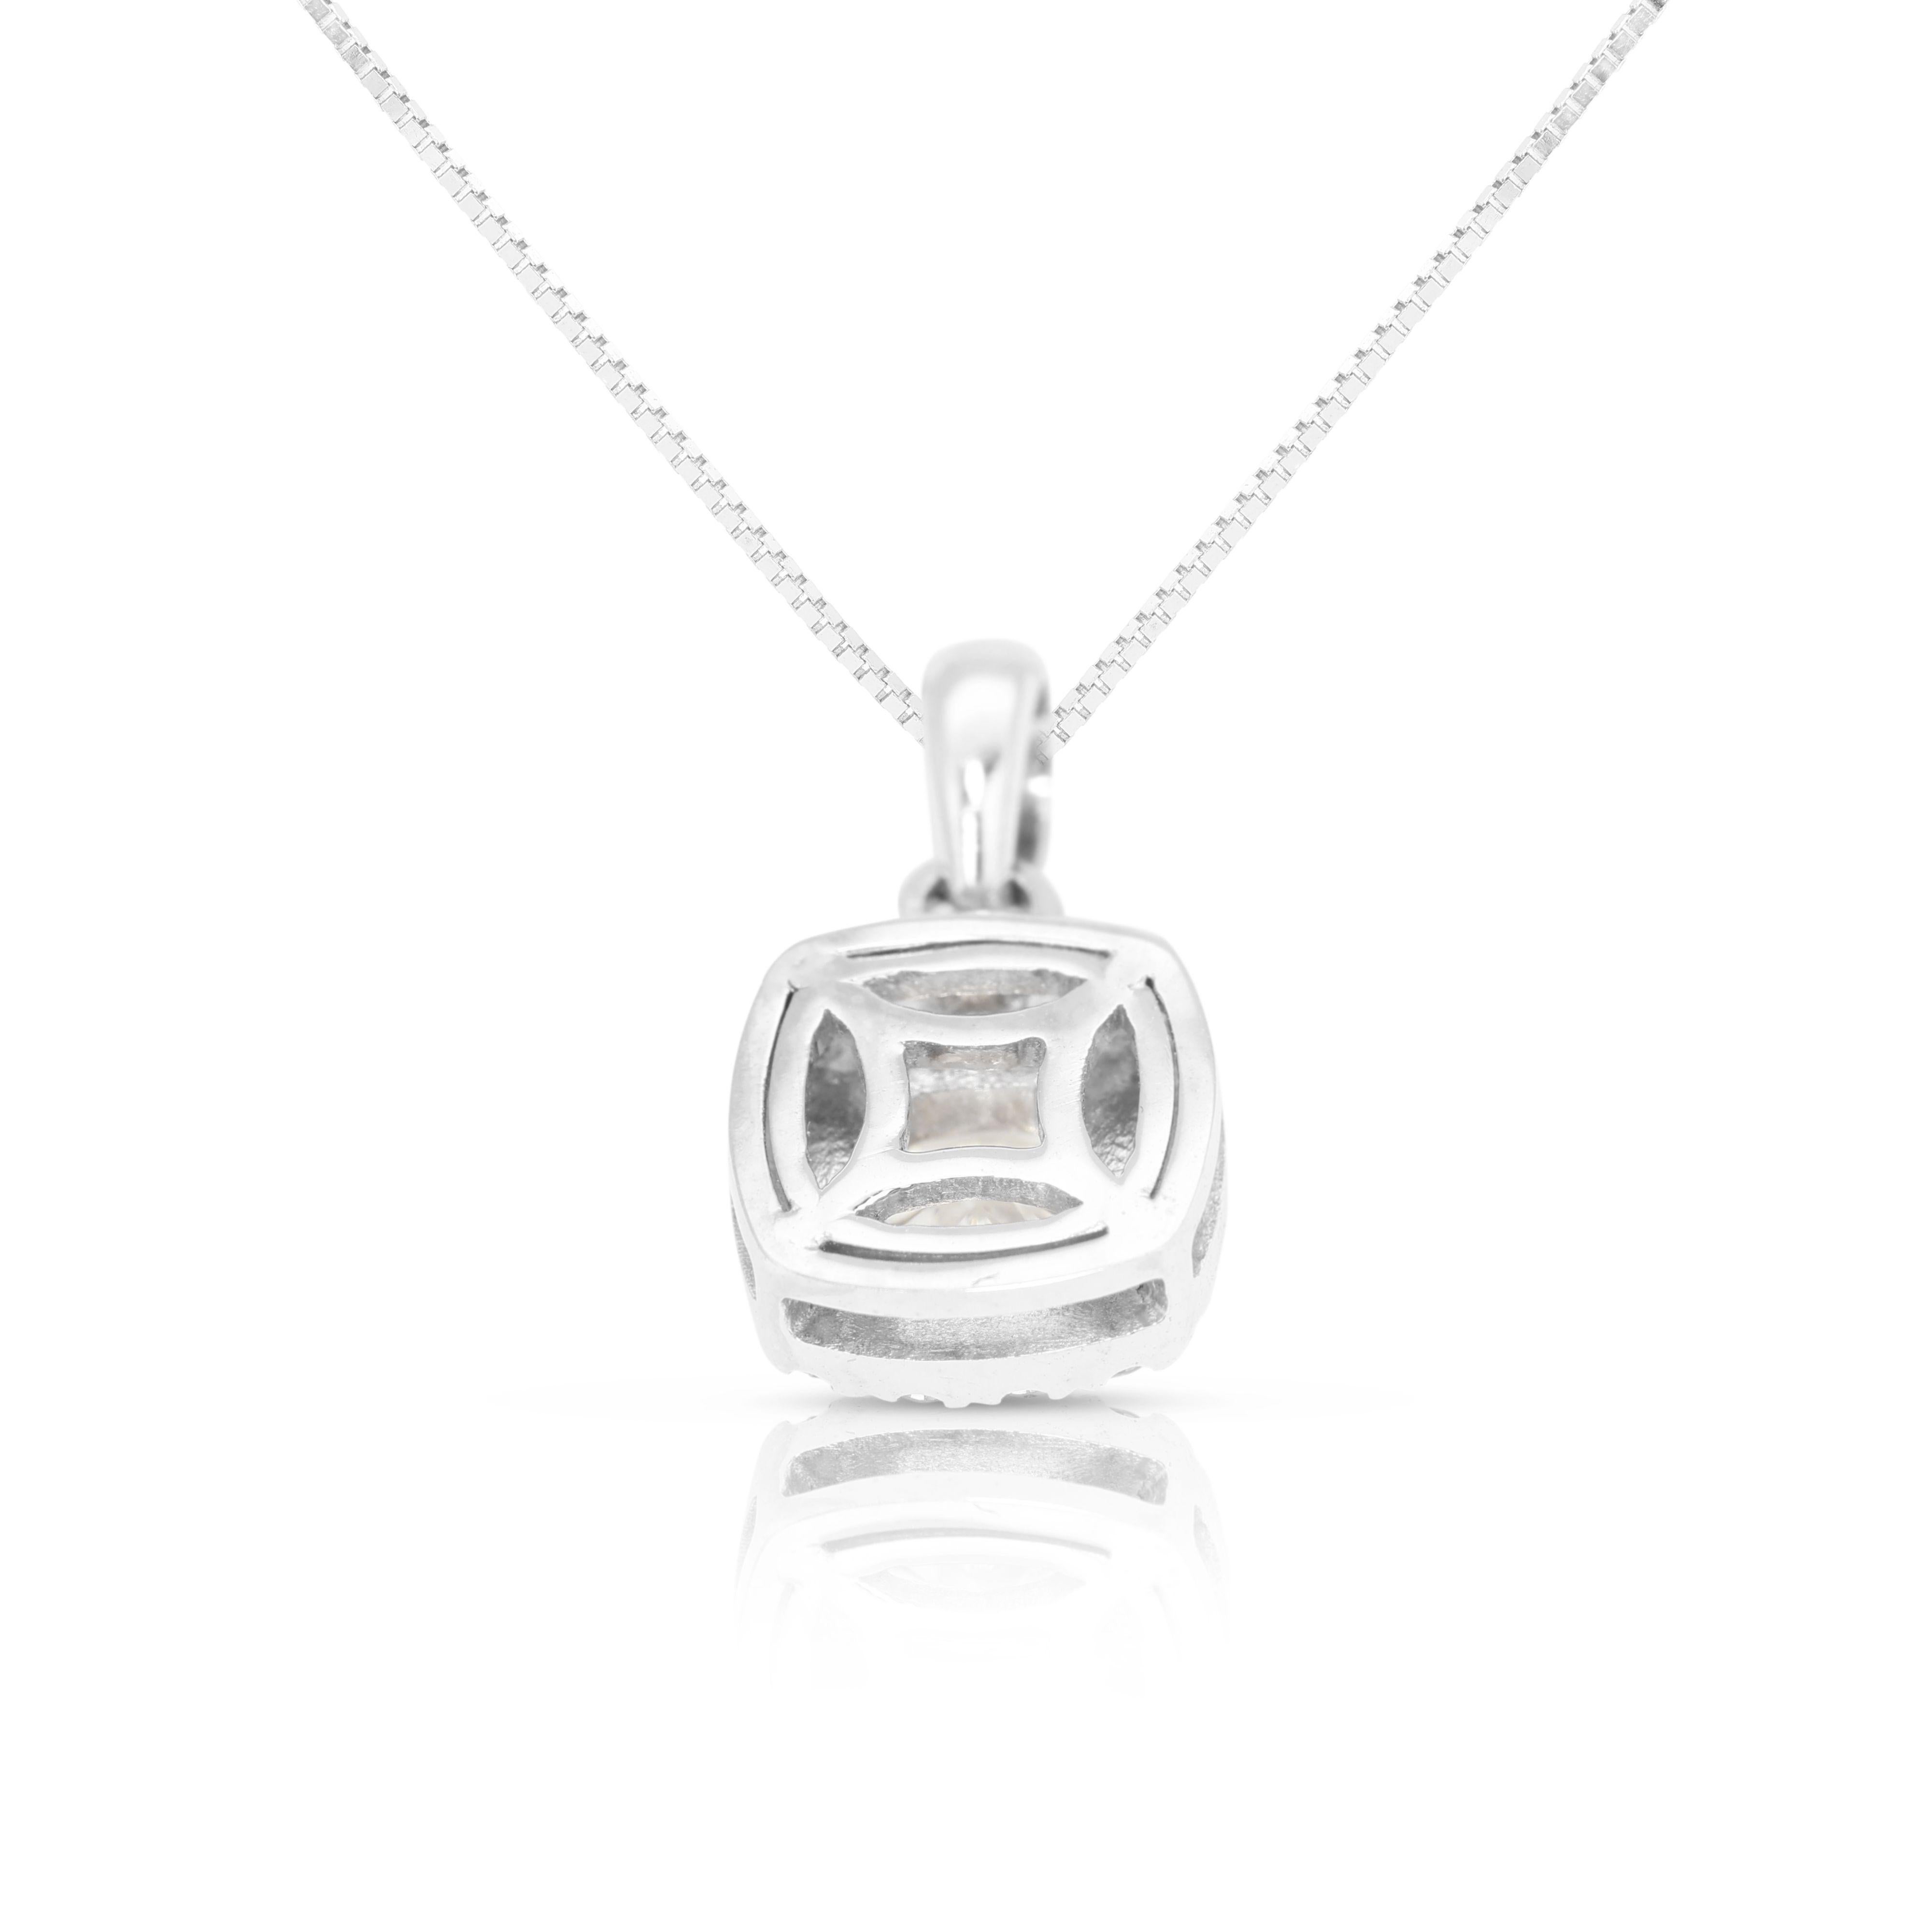 Elegant 18k White Gold Halo Pendant w/ 0.65ct Diamonds - Chain not included In Excellent Condition For Sale In רמת גן, IL